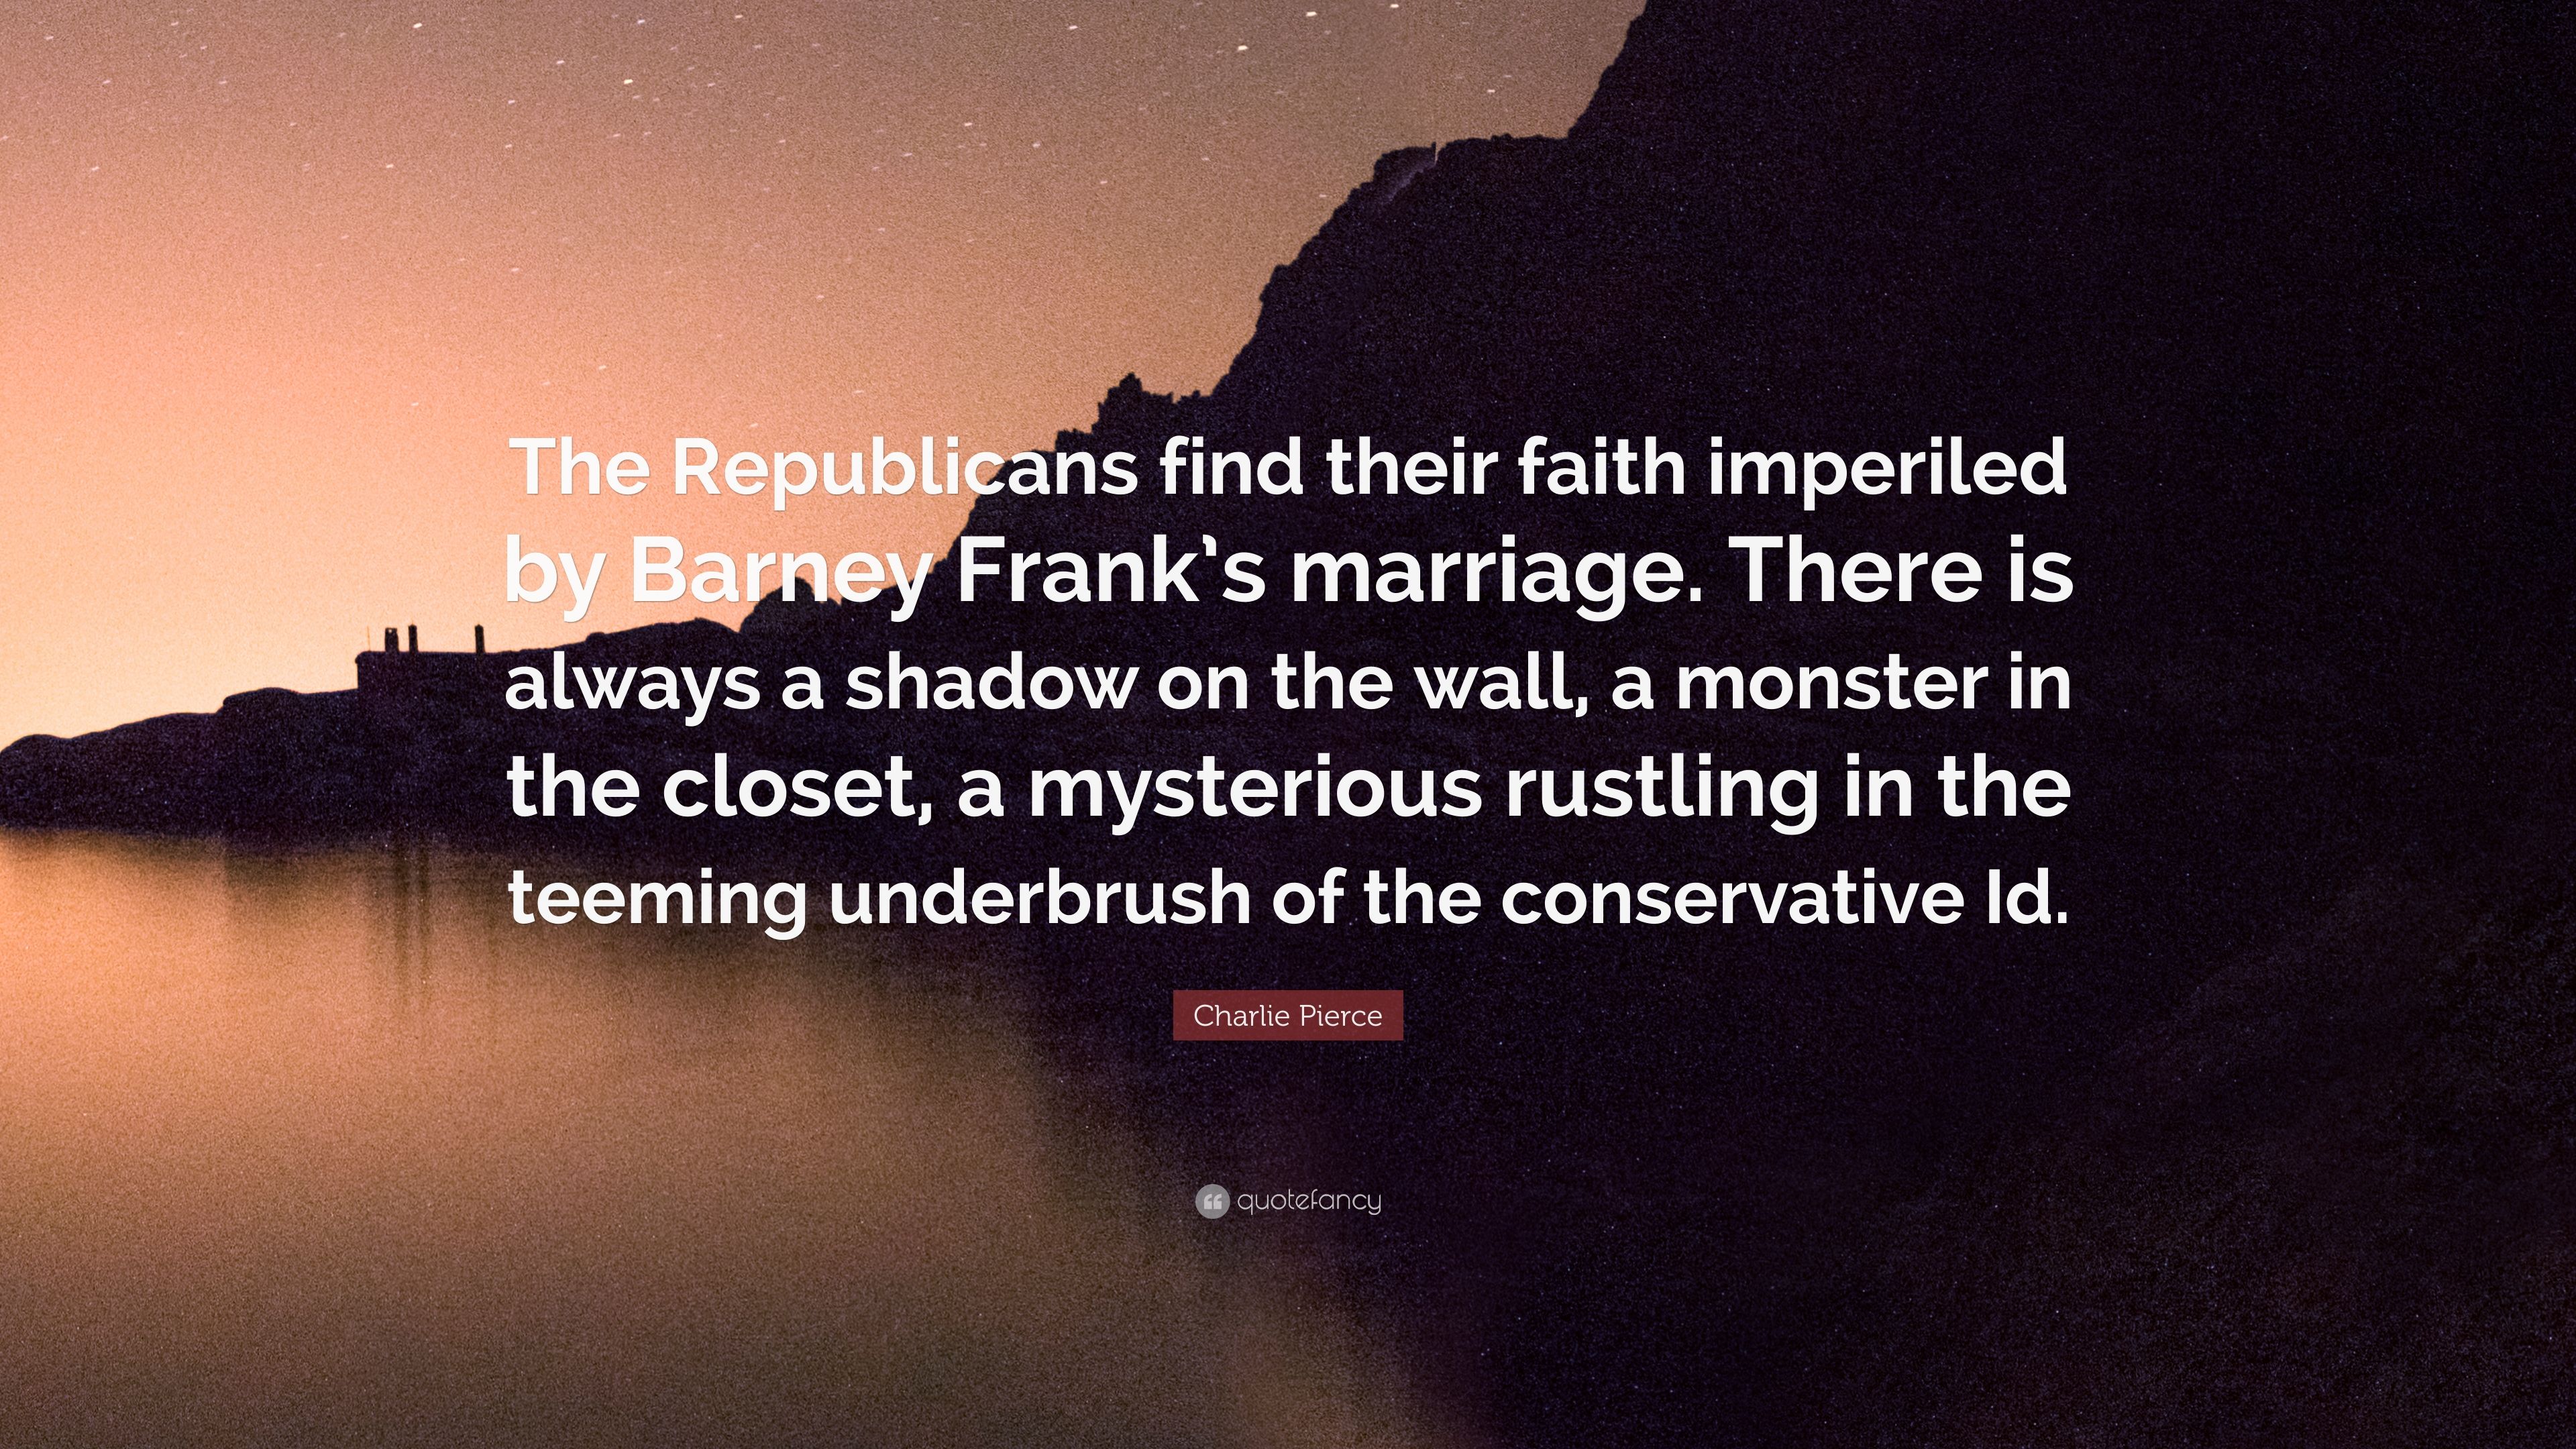 Charlie Pierce Quote: “The Republicans find their faith